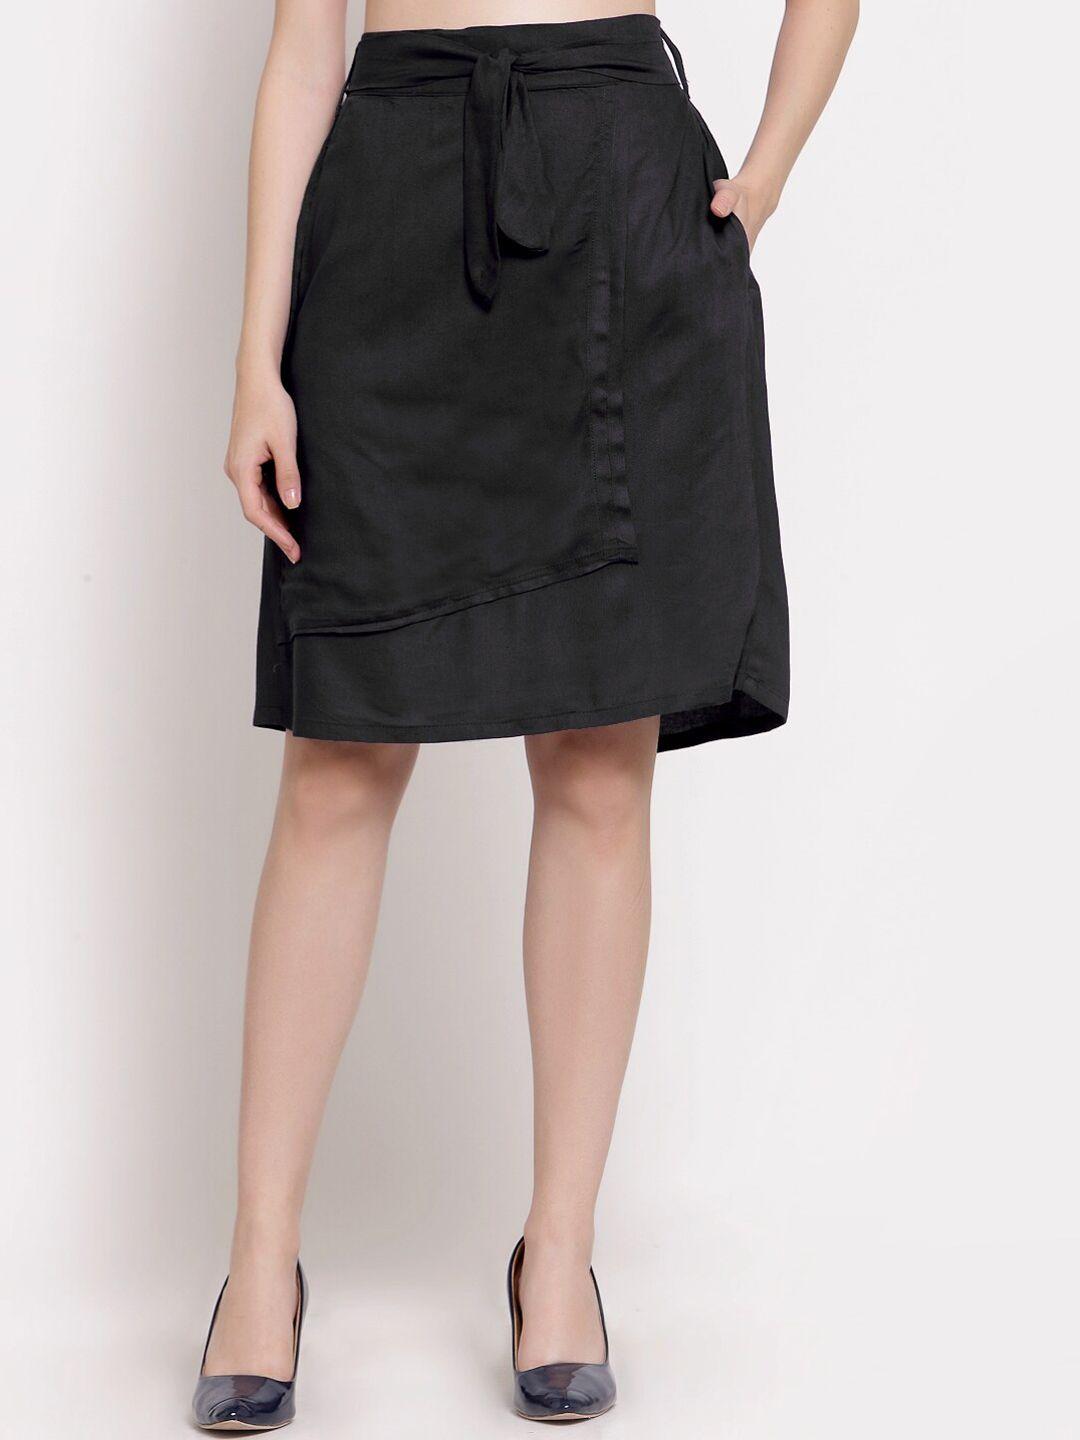 patrorna women black solid a-line skirt